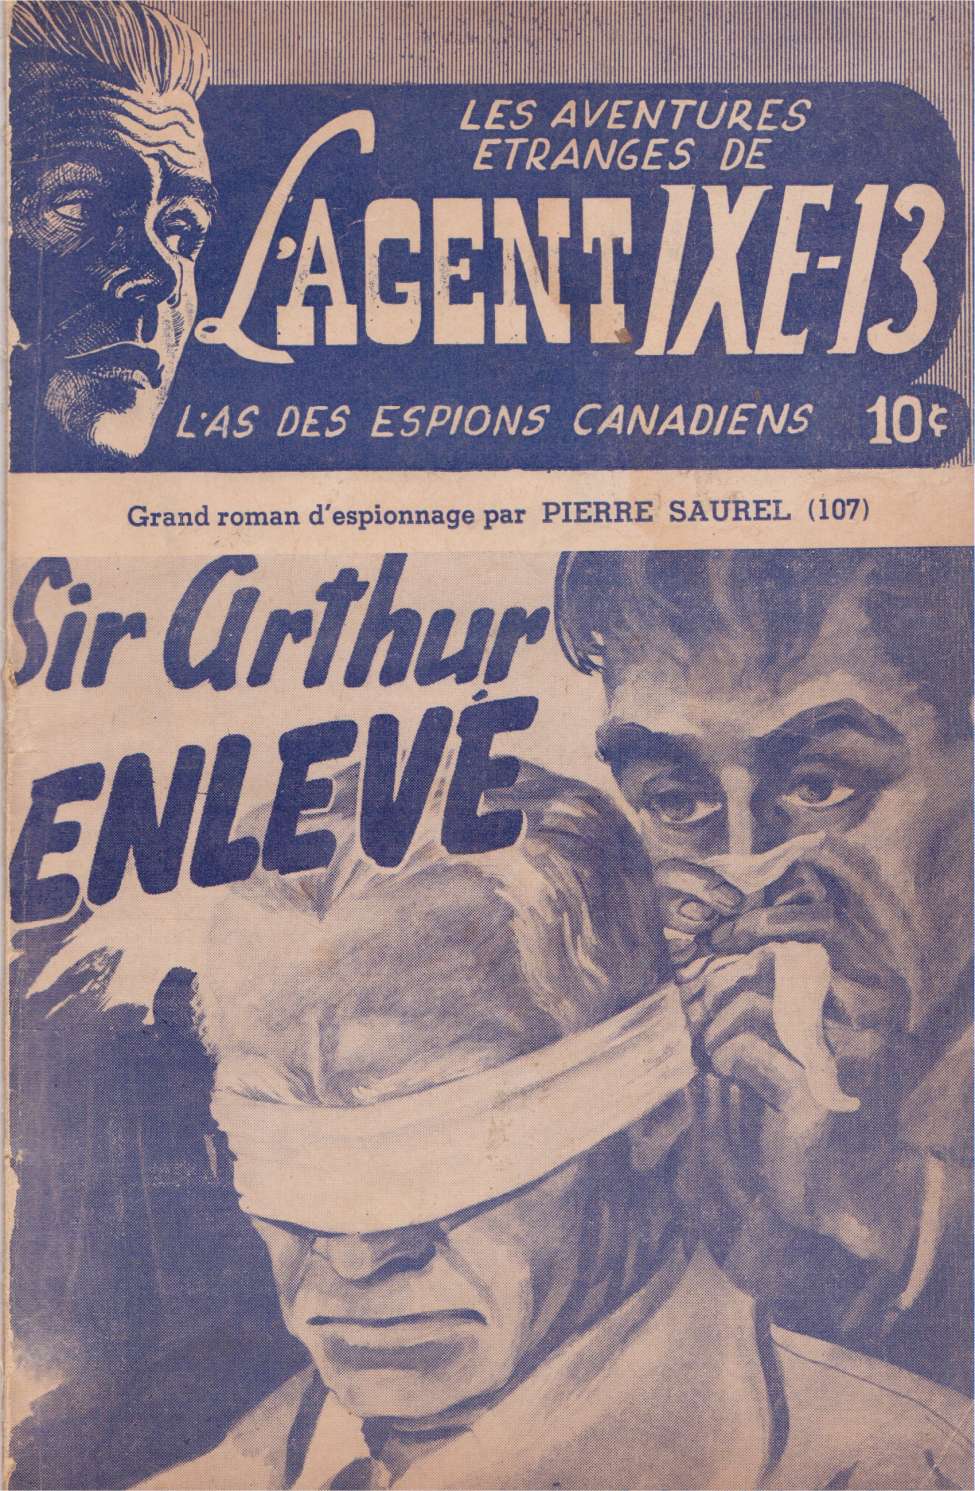 Comic Book Cover For L'Agent IXE-13 v2 107 - Sir Arthur enlevé